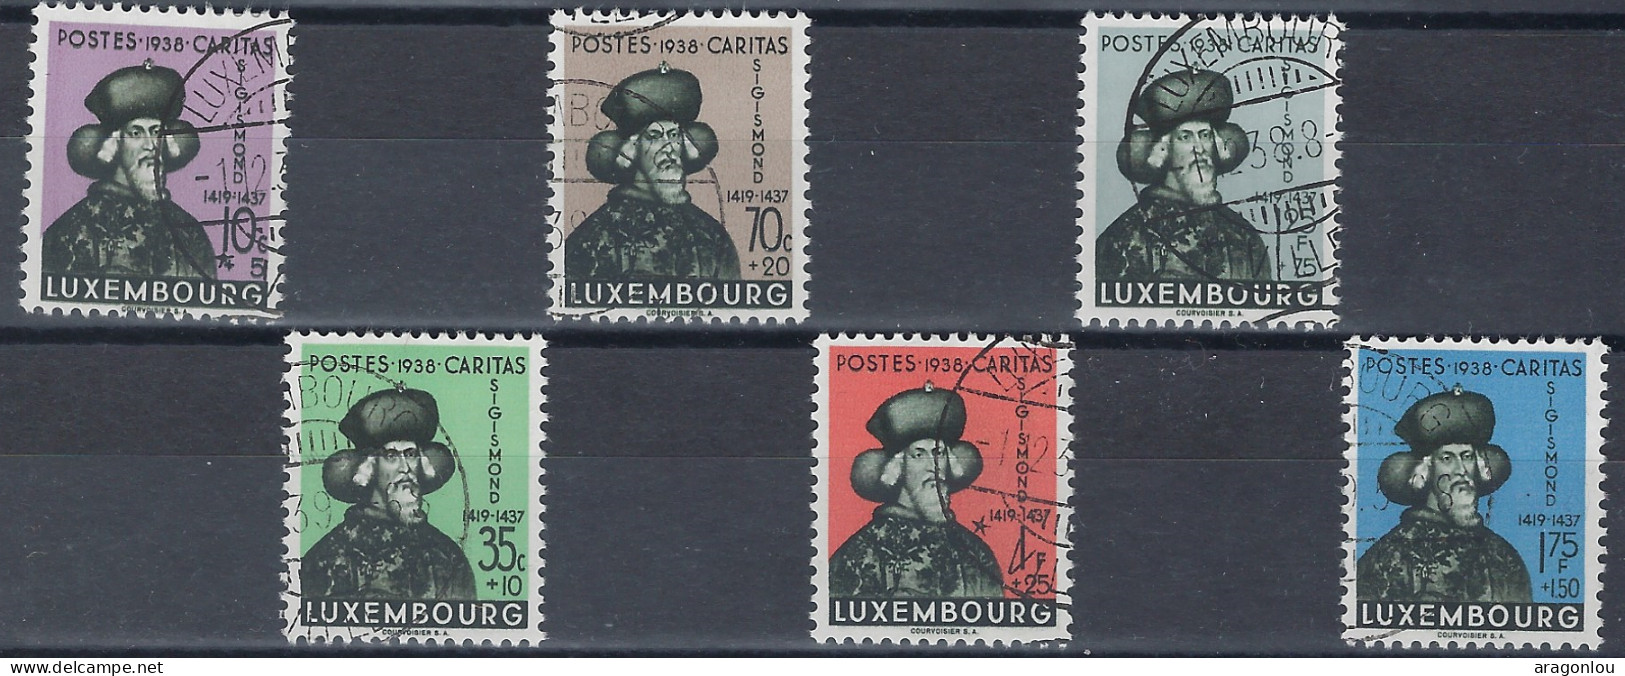 Luxembourg - Luxemburrg - Timbres  1938   Sigismund   Série   ° - Gebruikt